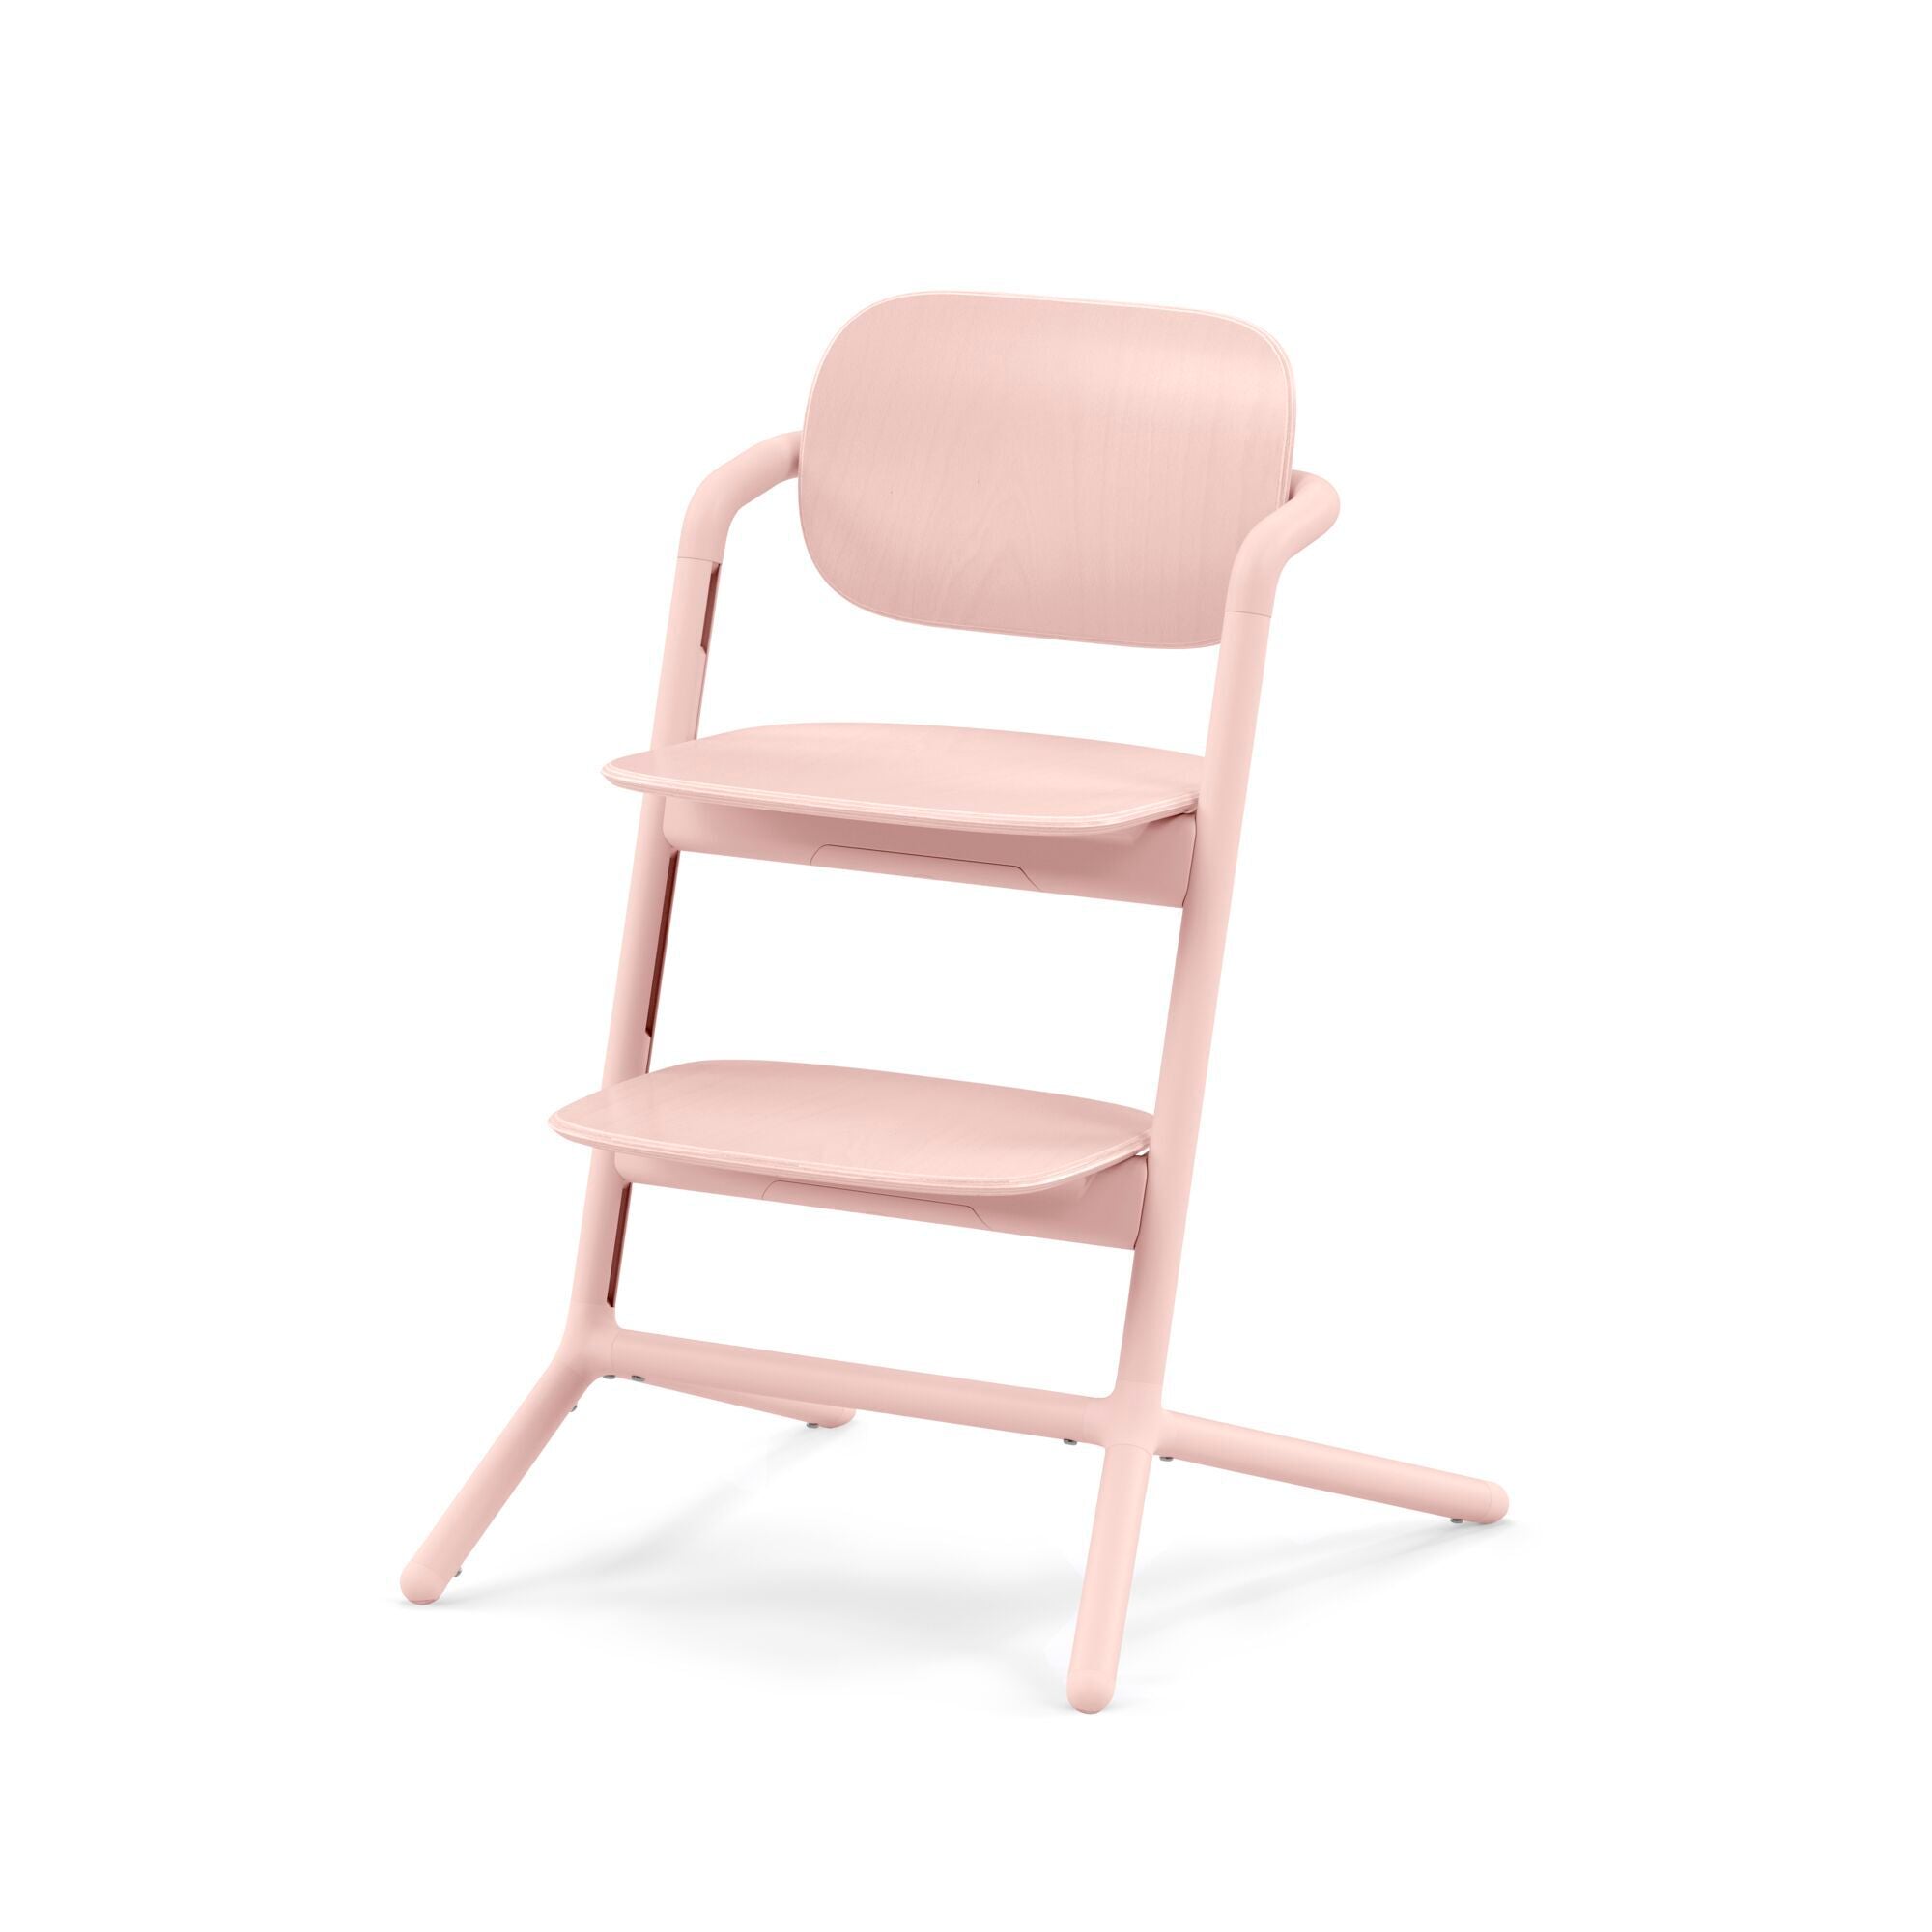 Cybex Lemo 2 High Chair 3-in-1 - ANB Baby -4063846197606$100 - $300